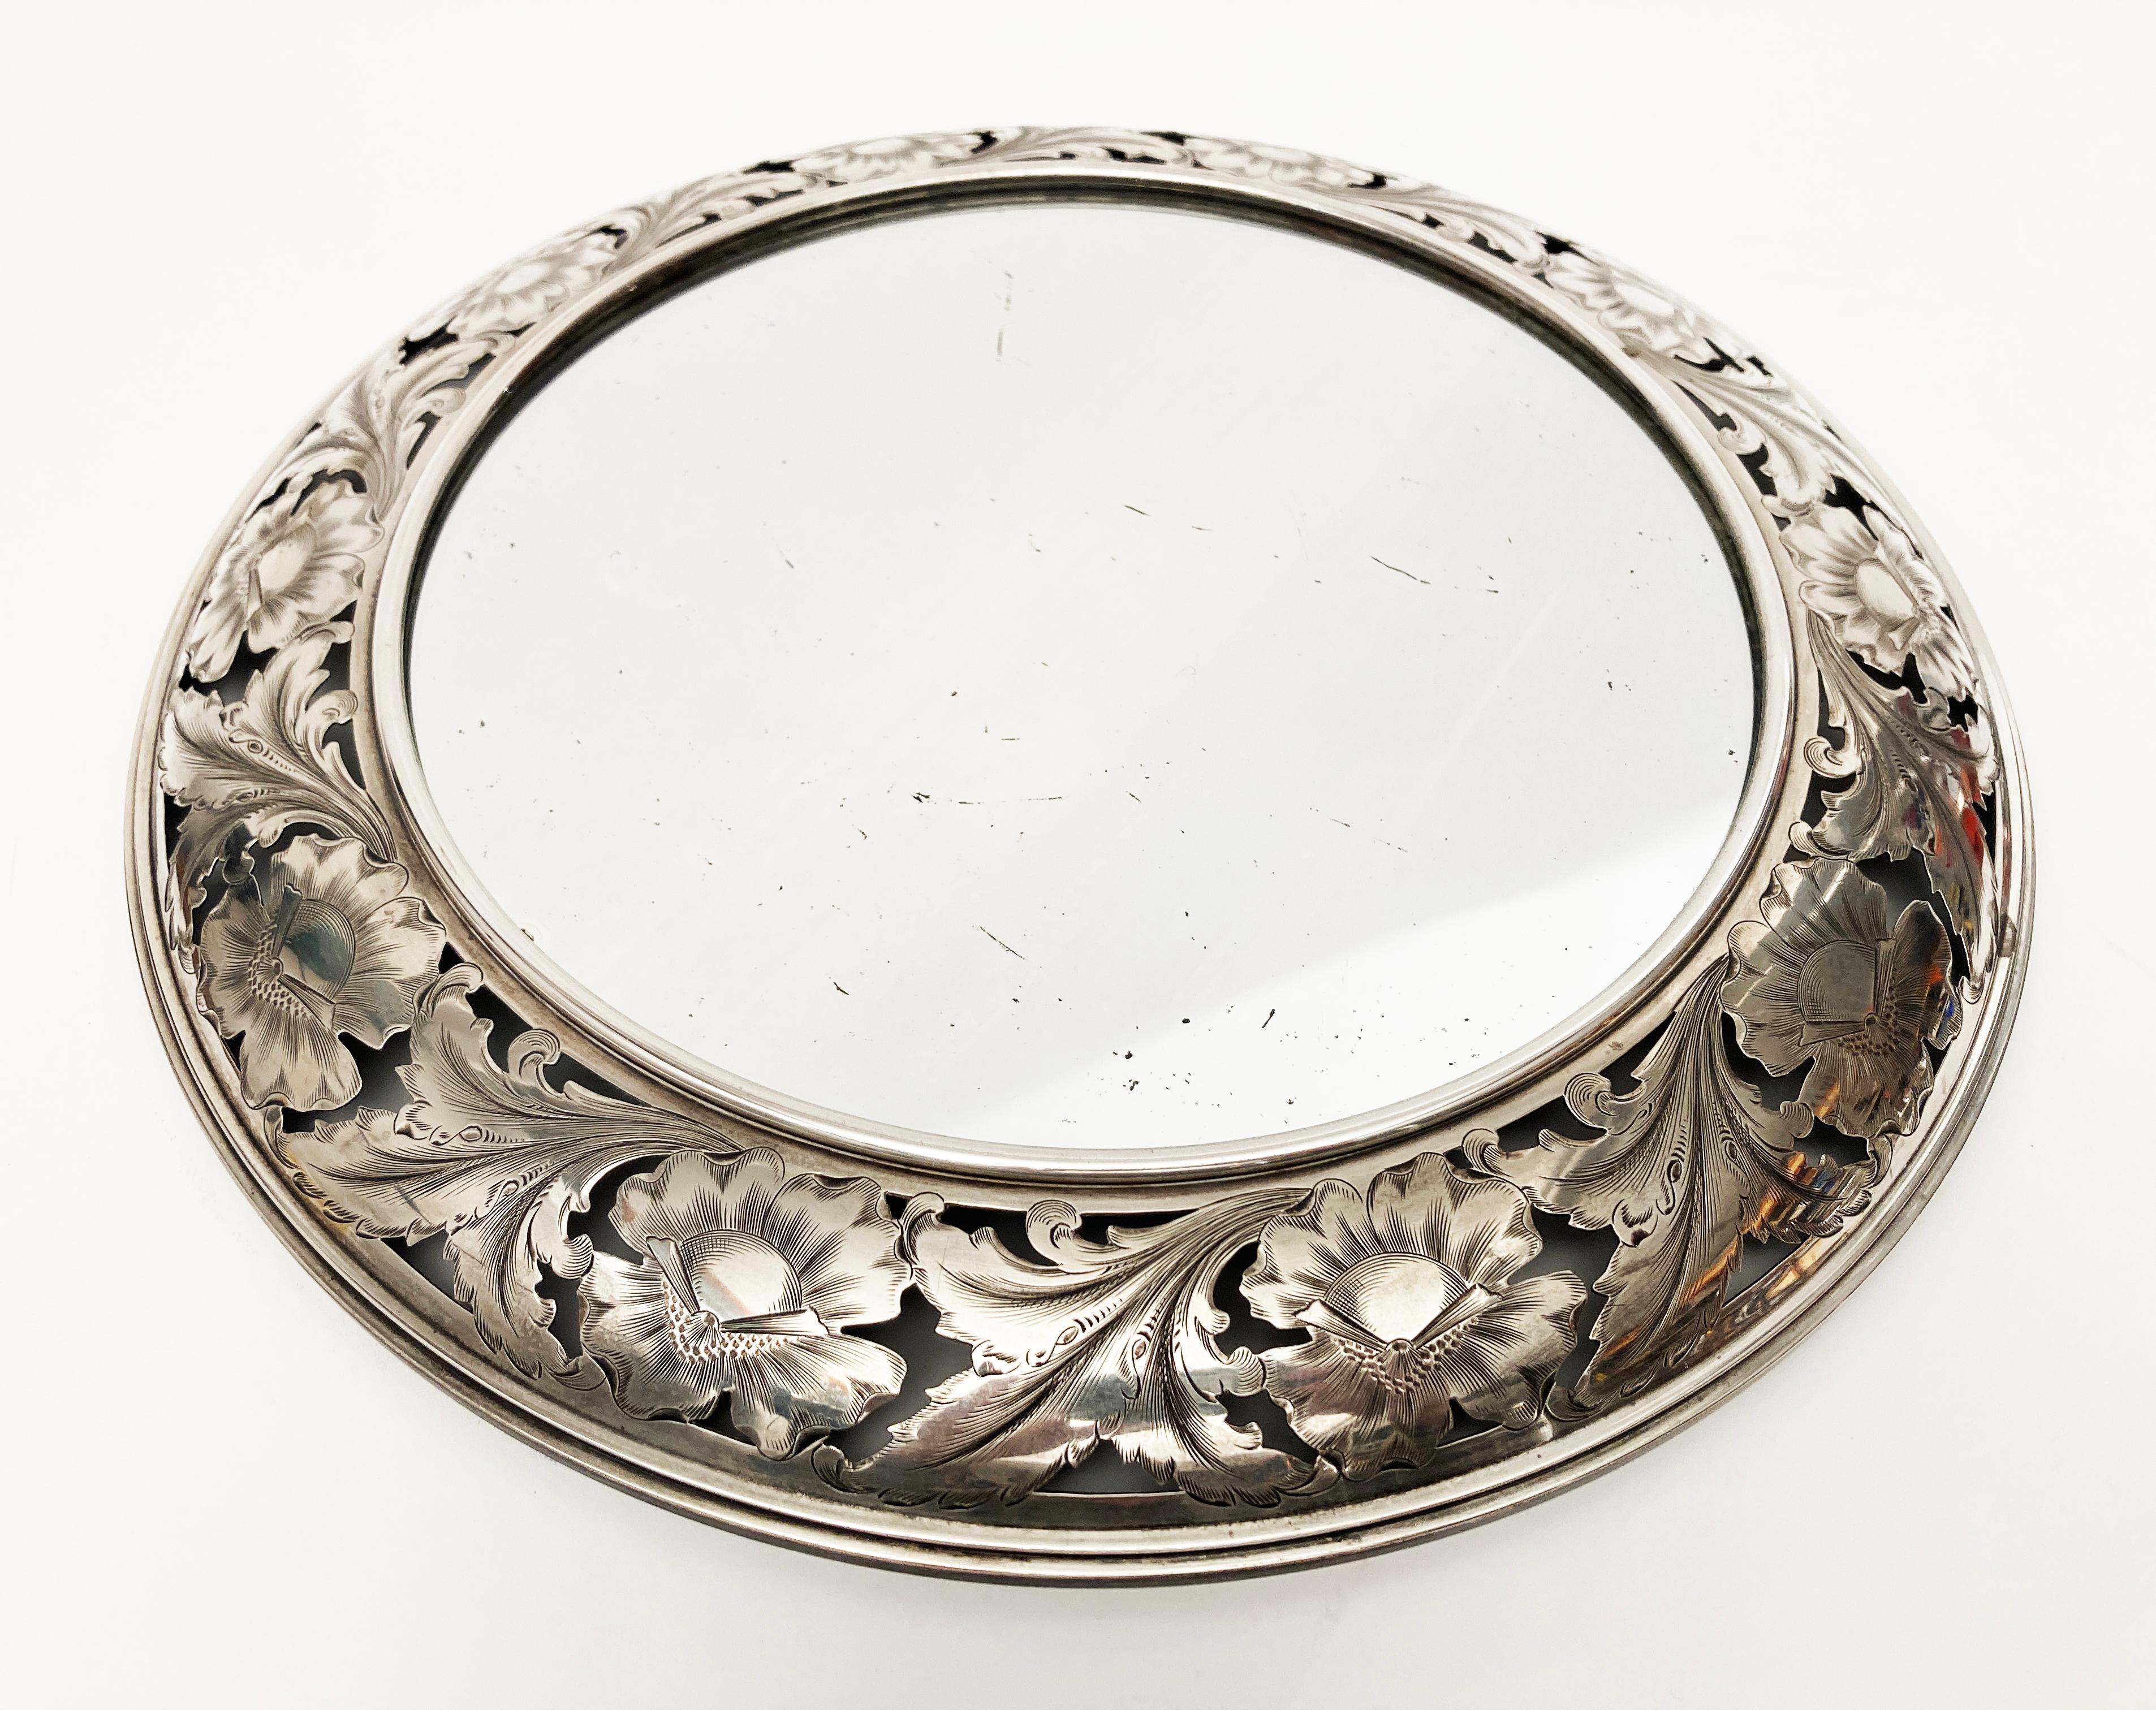 Frühes 20. Jahrhundert Sterling Silber Kreisförmiger netzförmiger Spiegel mit geätzten Folia (Art nouveau) im Angebot